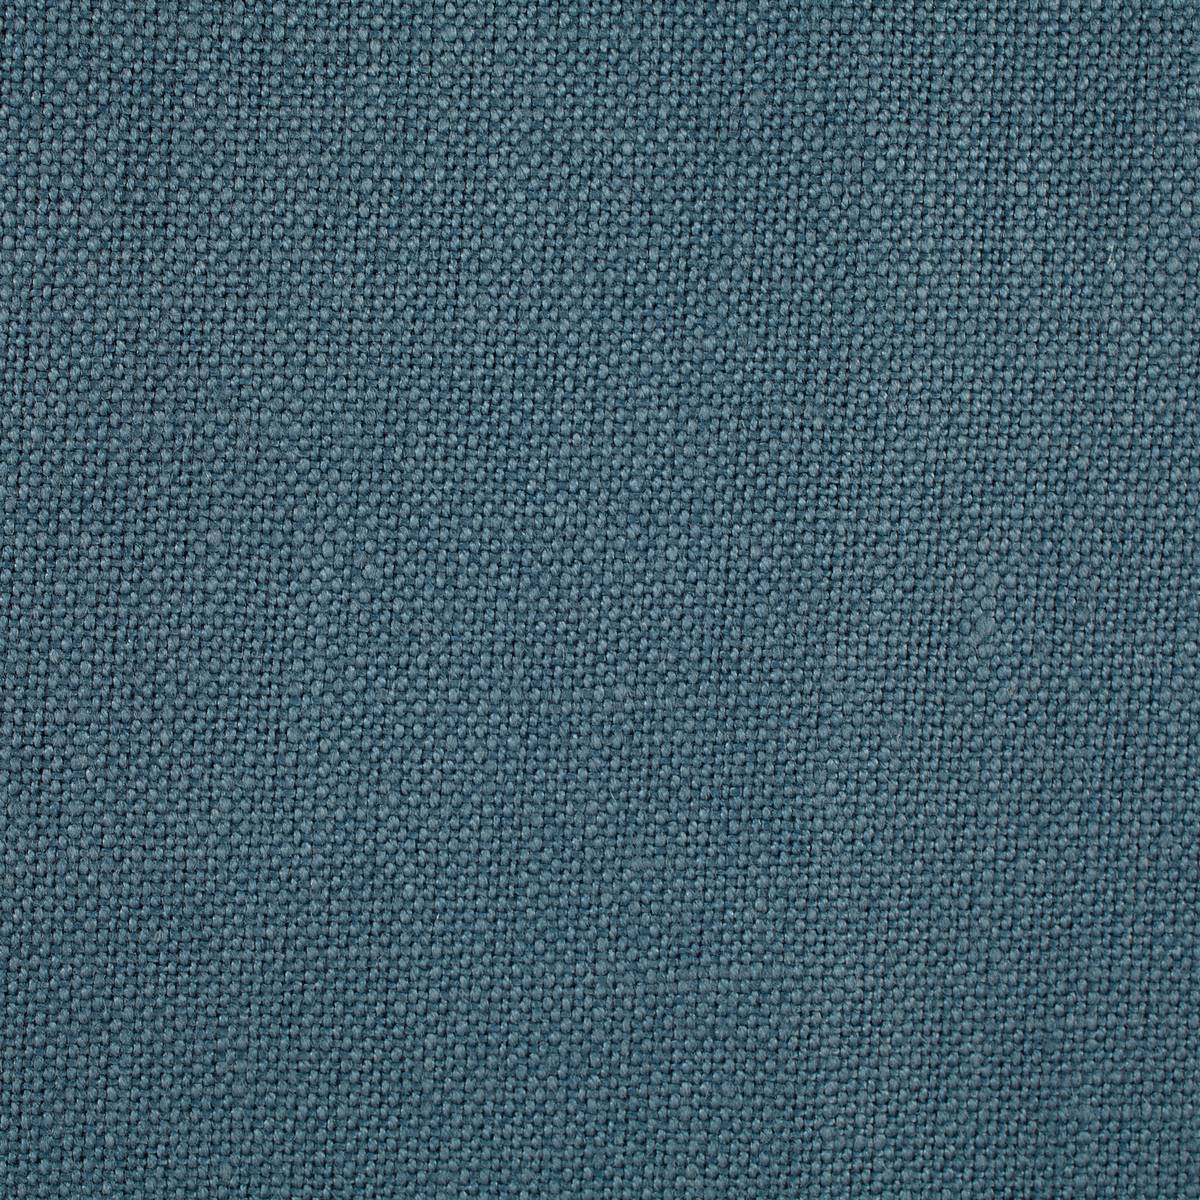 Malbec Teal Fabric by Sanderson